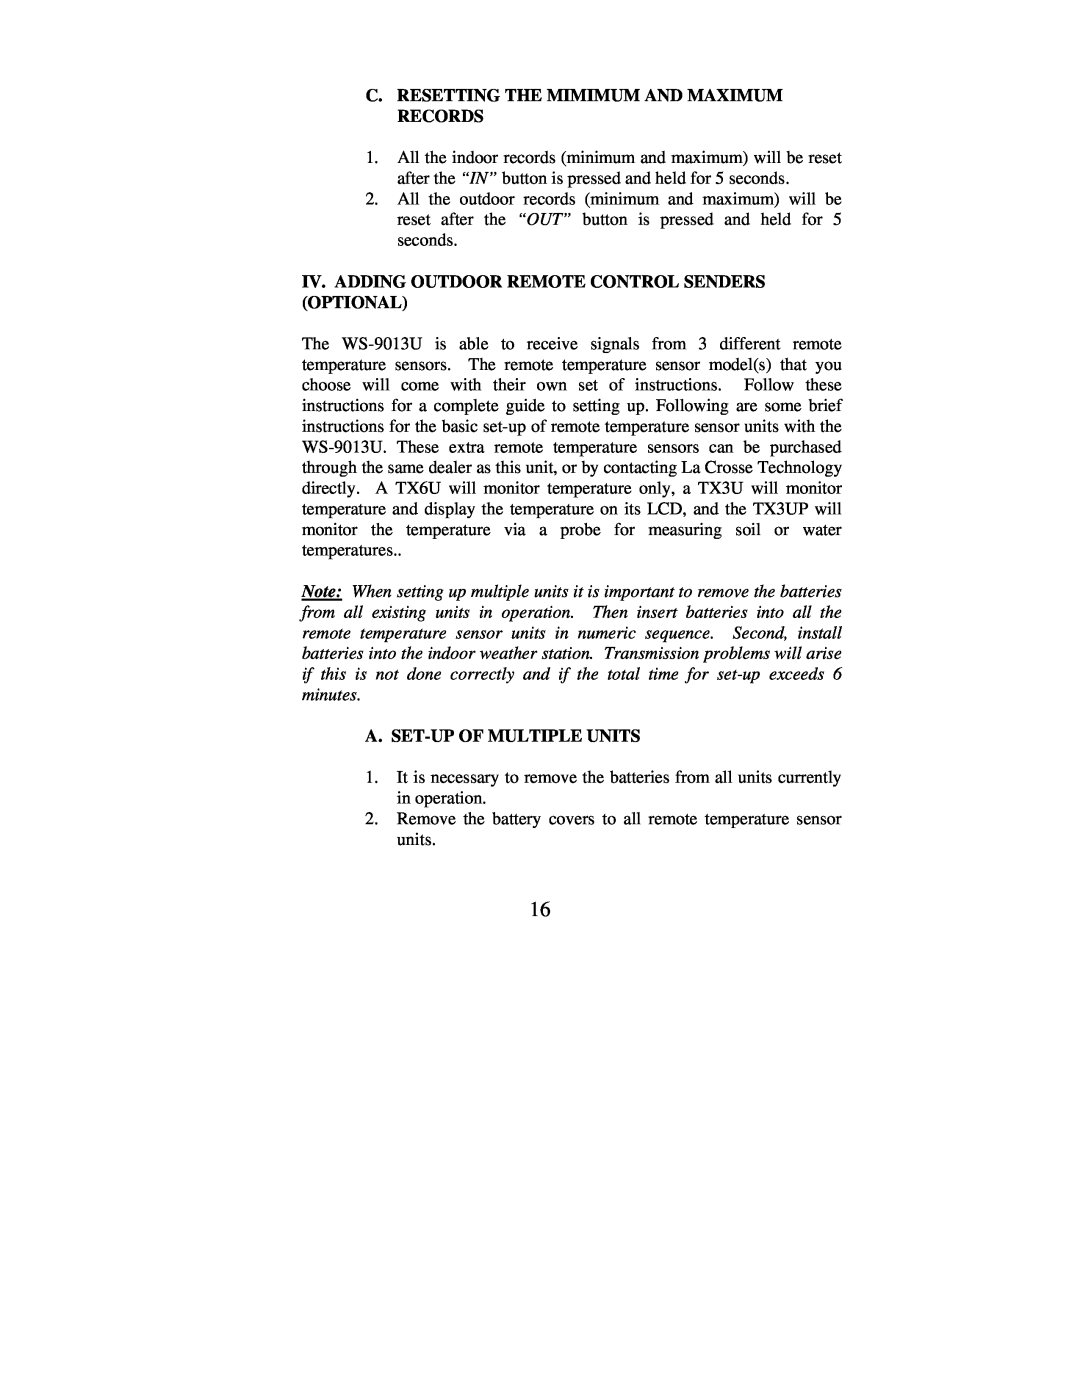 La Crosse Technology WS-9013U instruction manual C. Resetting The Mimimum And Maximum Records, A. Set-Up Of Multiple Units 